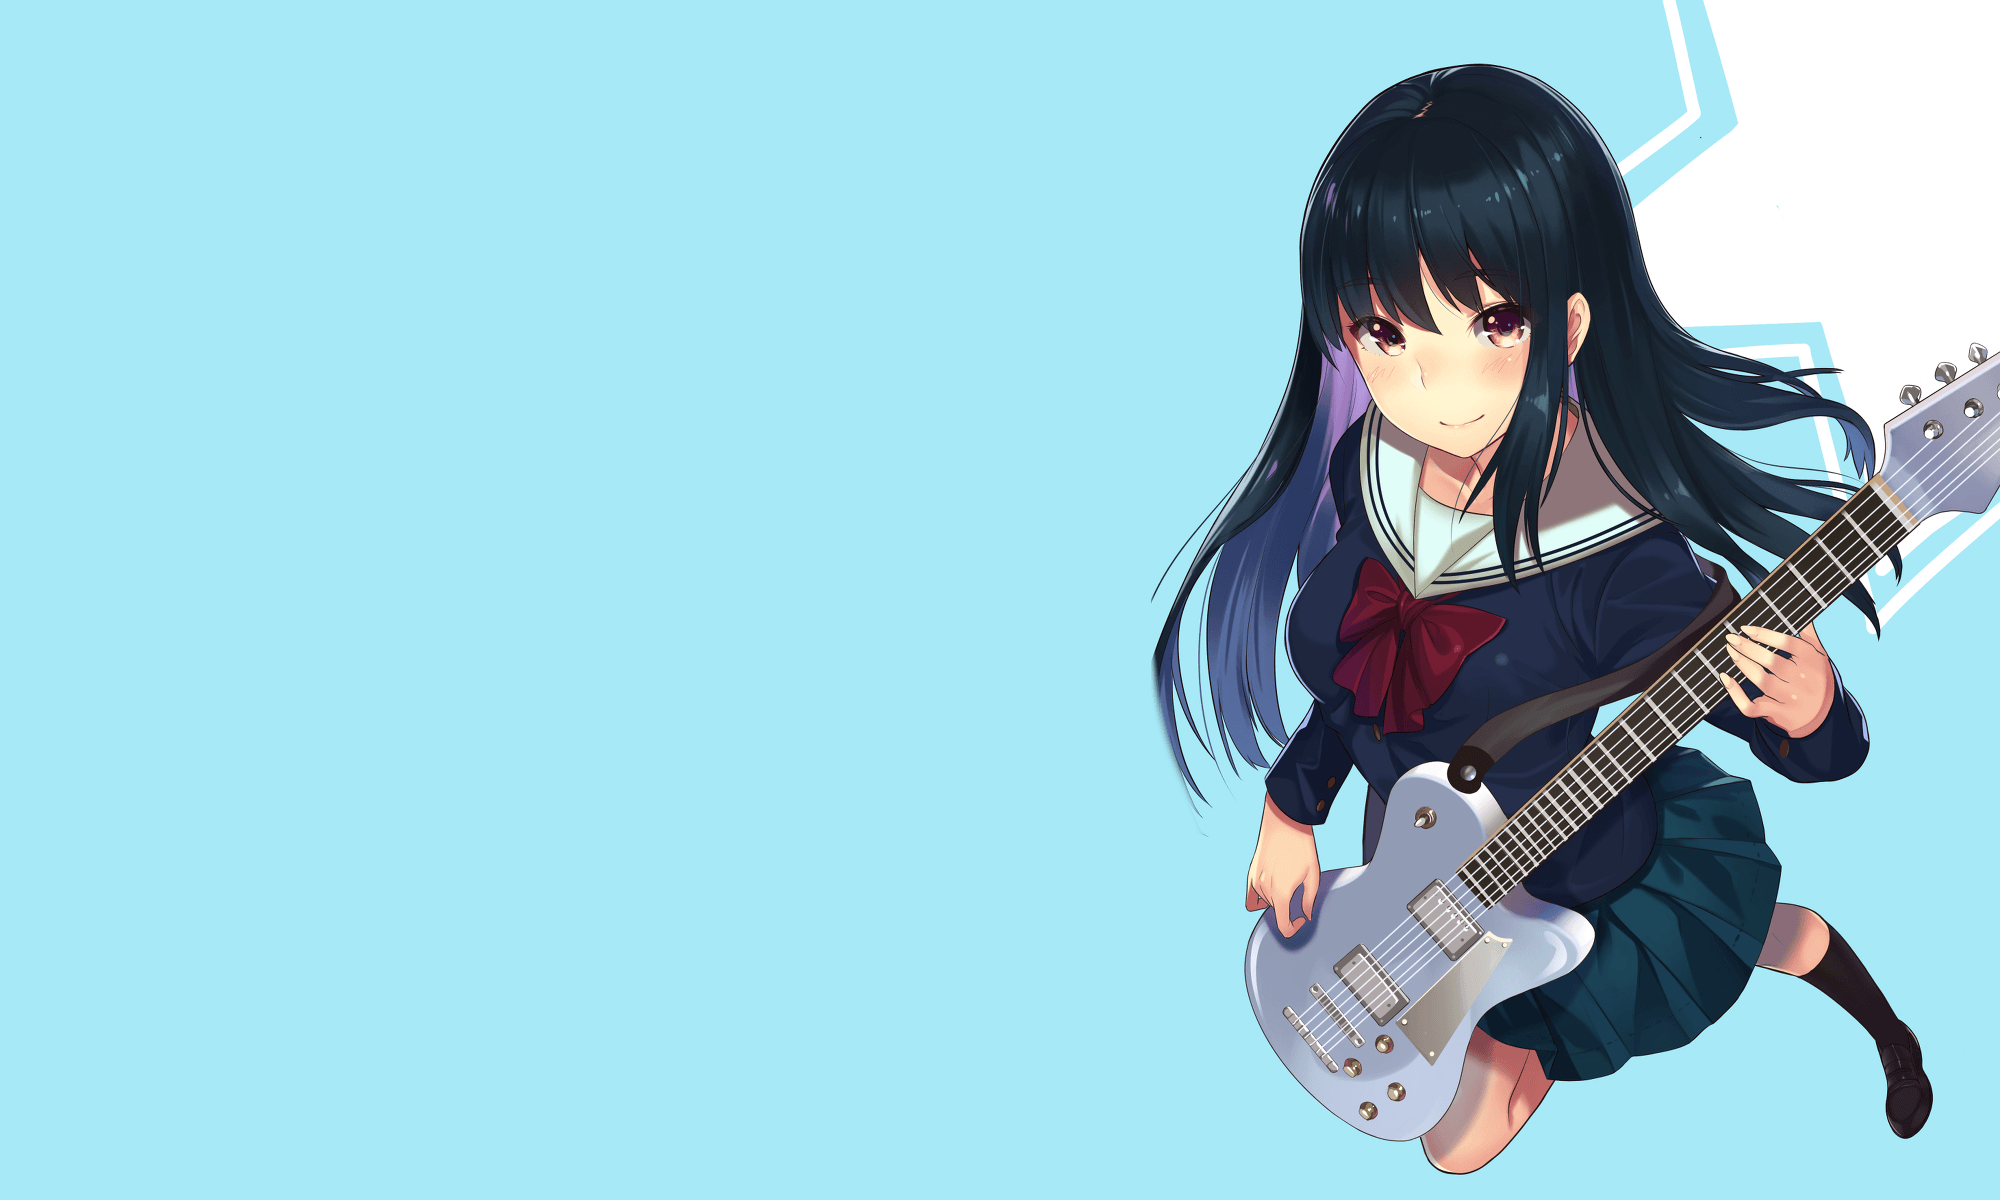 Girl, Guitar wallpaper and background. Anime. Tokkoro.com